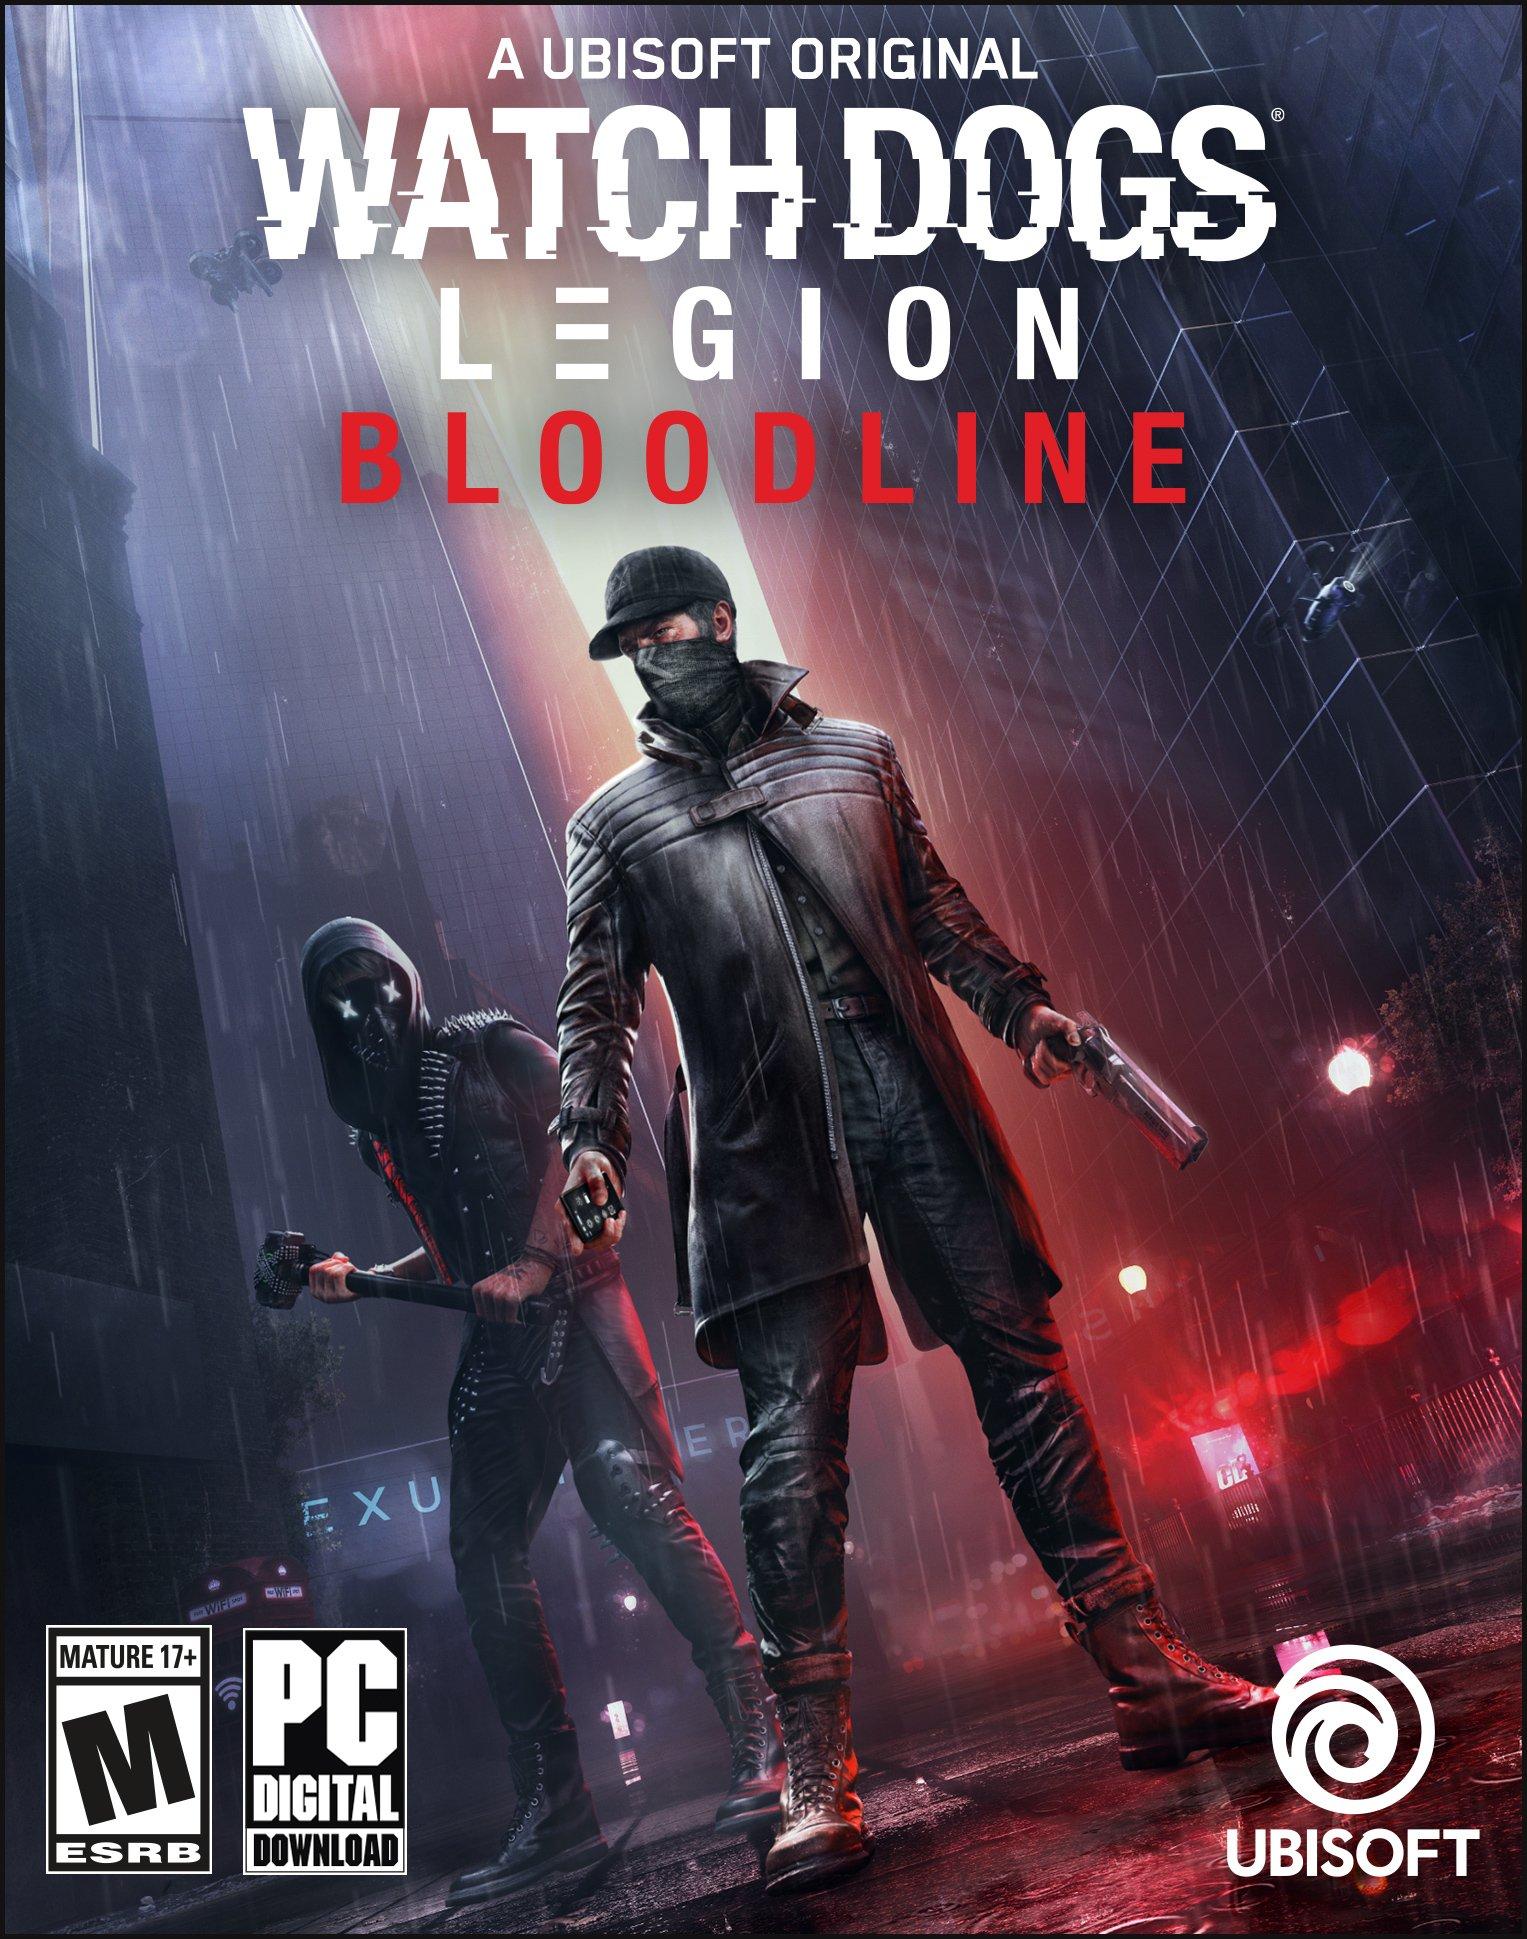 Watch Dogs: Legion Bloodline DLC - PC Ubisoft Connect